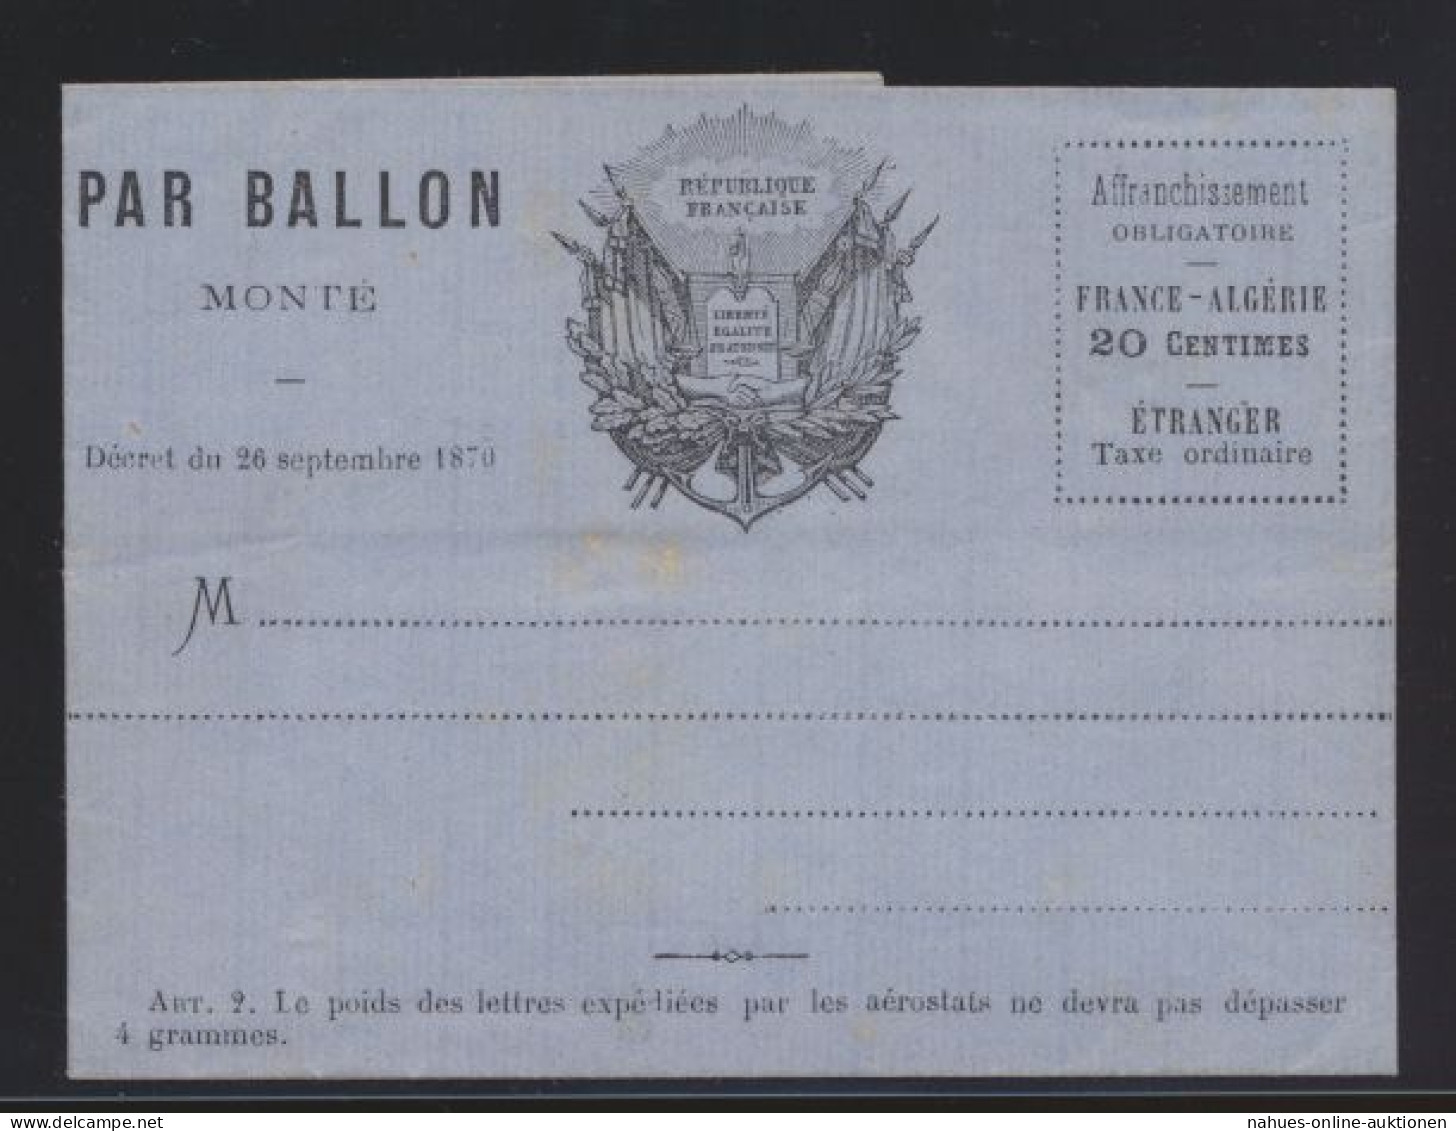 Flugpost Air Mail Ballonpost Ballon Monte Frankreich France 20 C. Faltbrief Von - Lettres & Documents